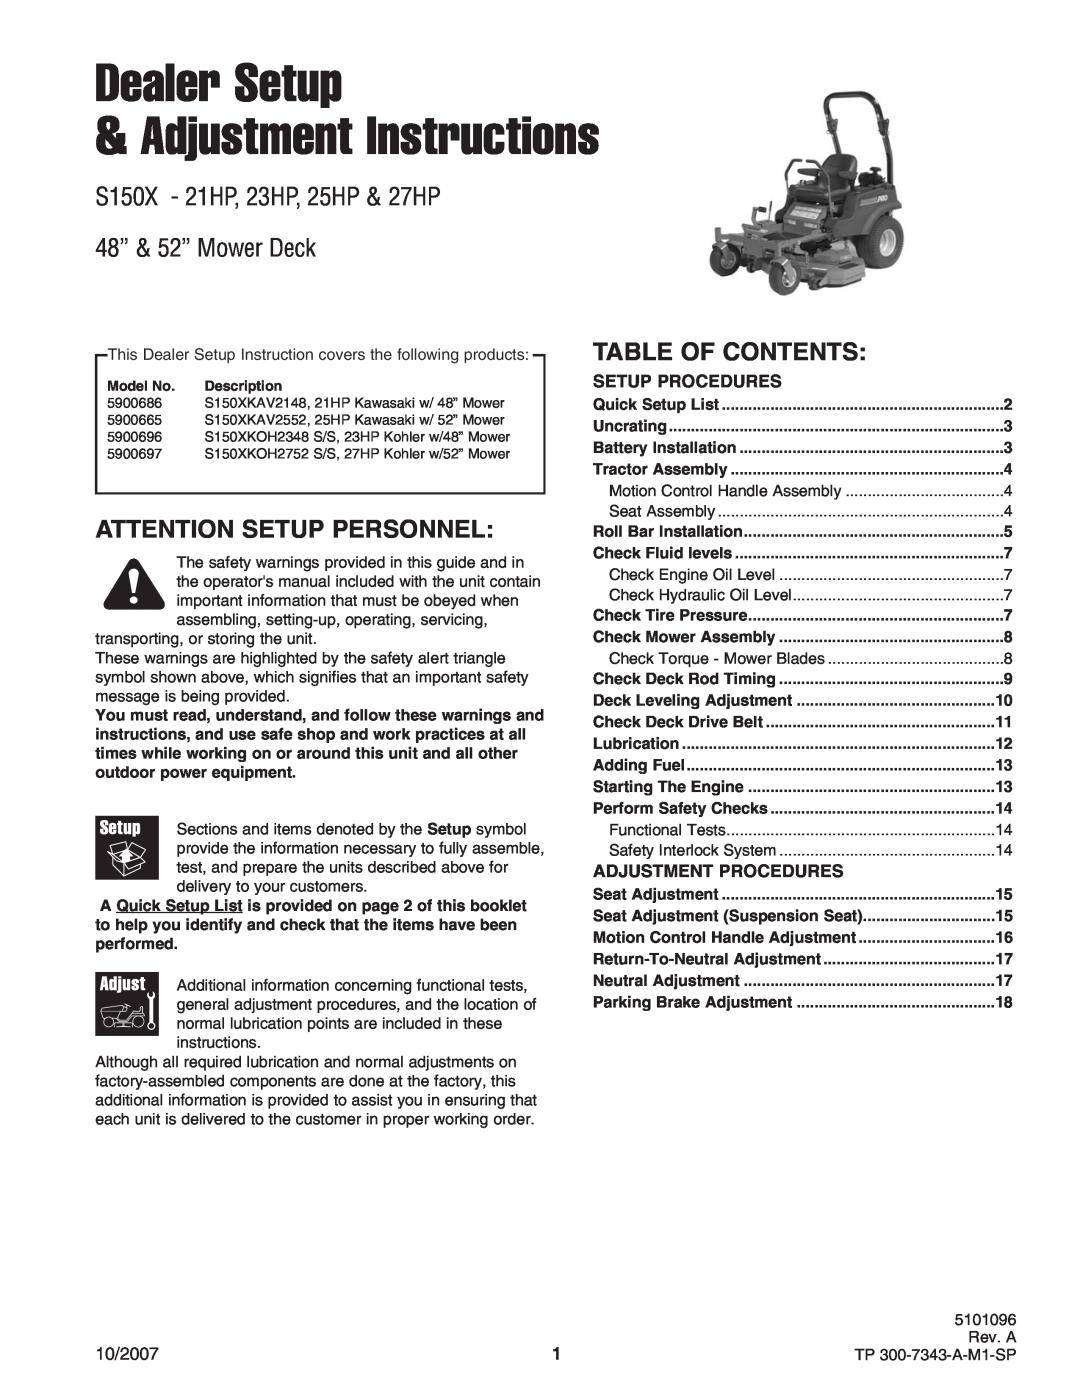 Snapper S150X manual Attention Setup Personnel, Table Of Contents, Dealer Setup Adjustment Instructions 